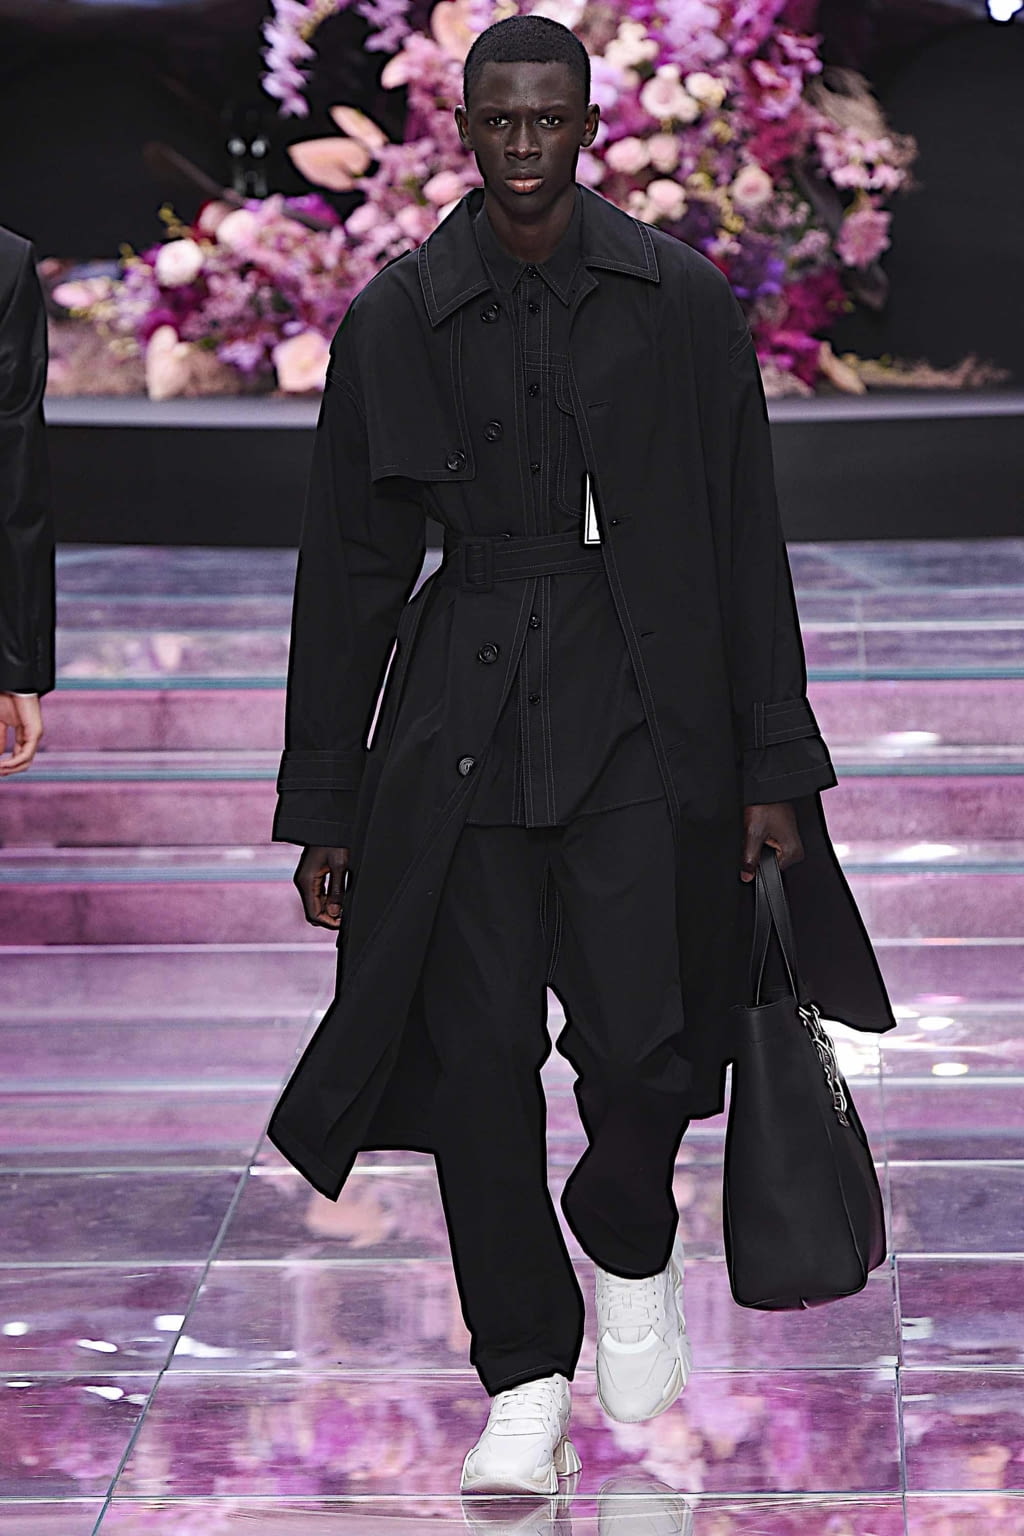 Khadim Sock walks the runway during the Louis Vuitton Menswear